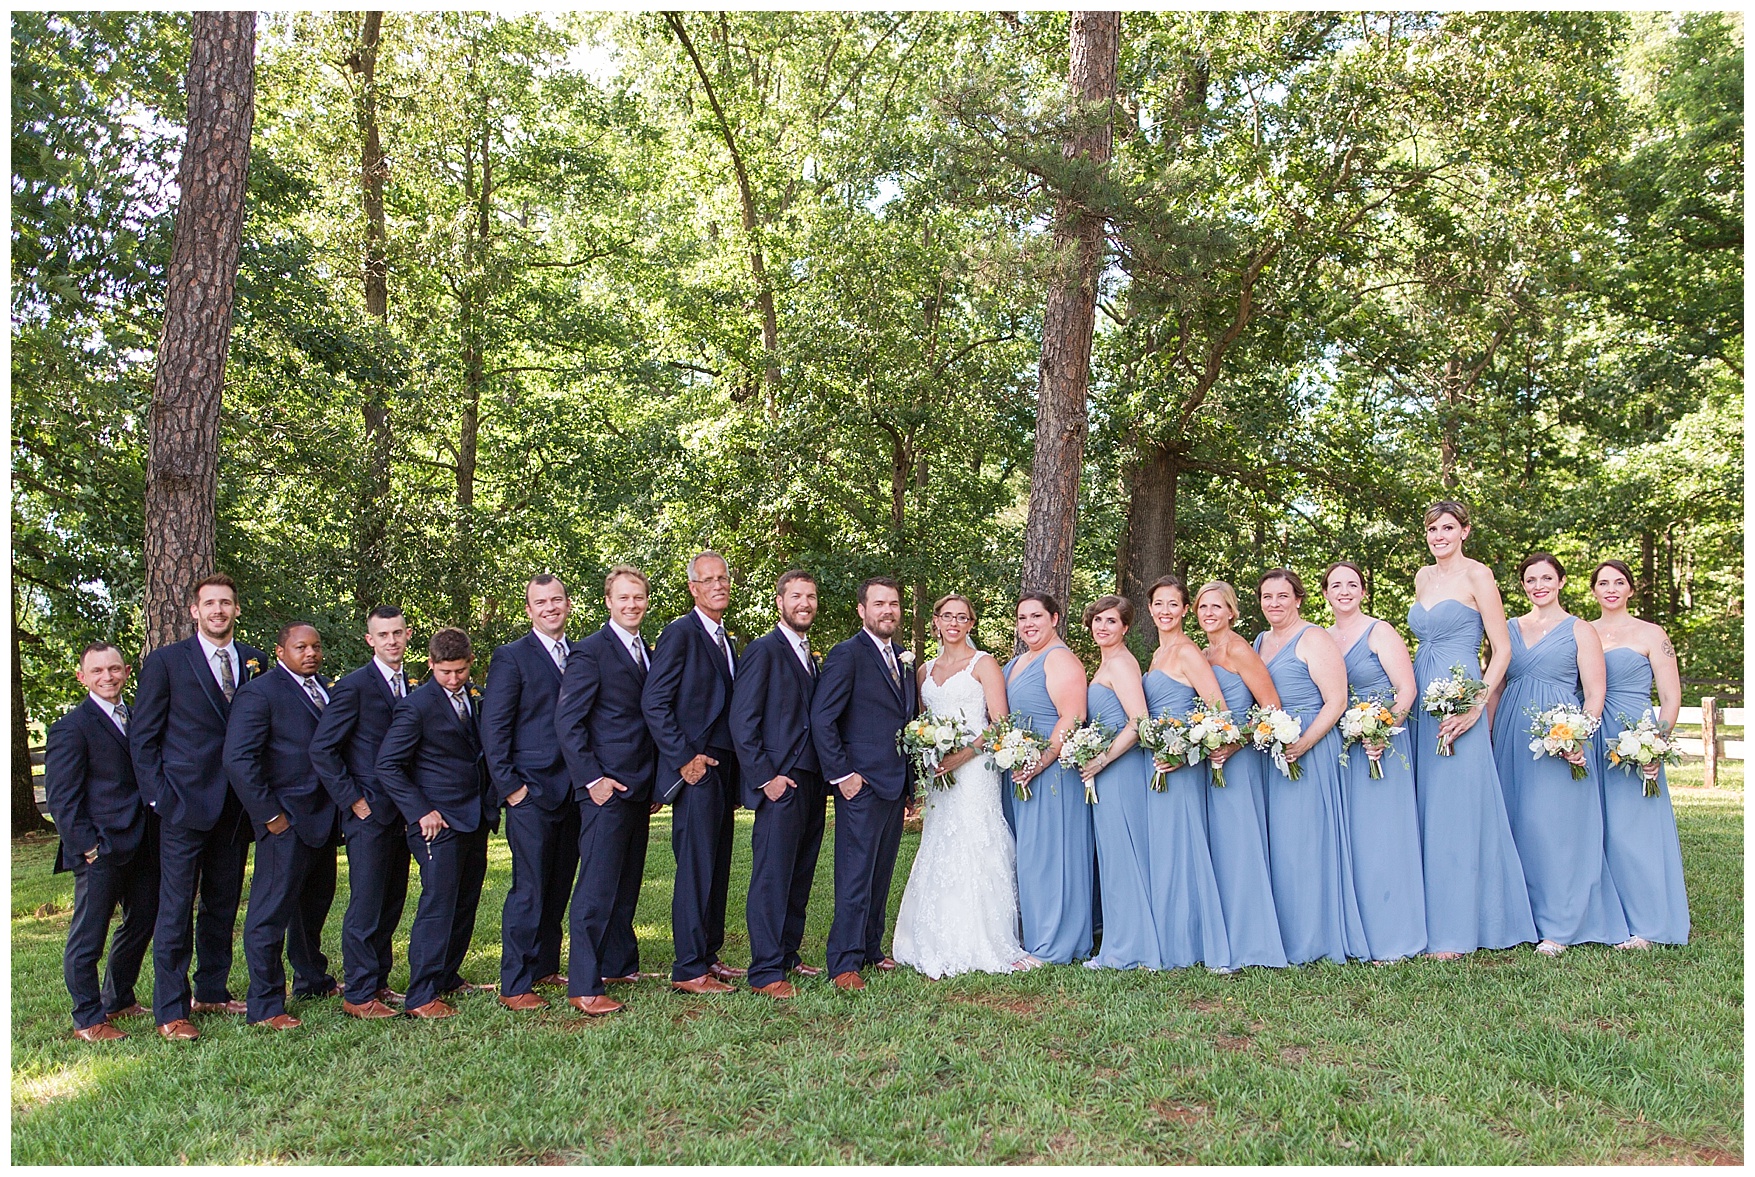 Knight’s Gambit Vineyard Wedding in Charlottesville, Virginia || Central VA Winery Wedding Photographer